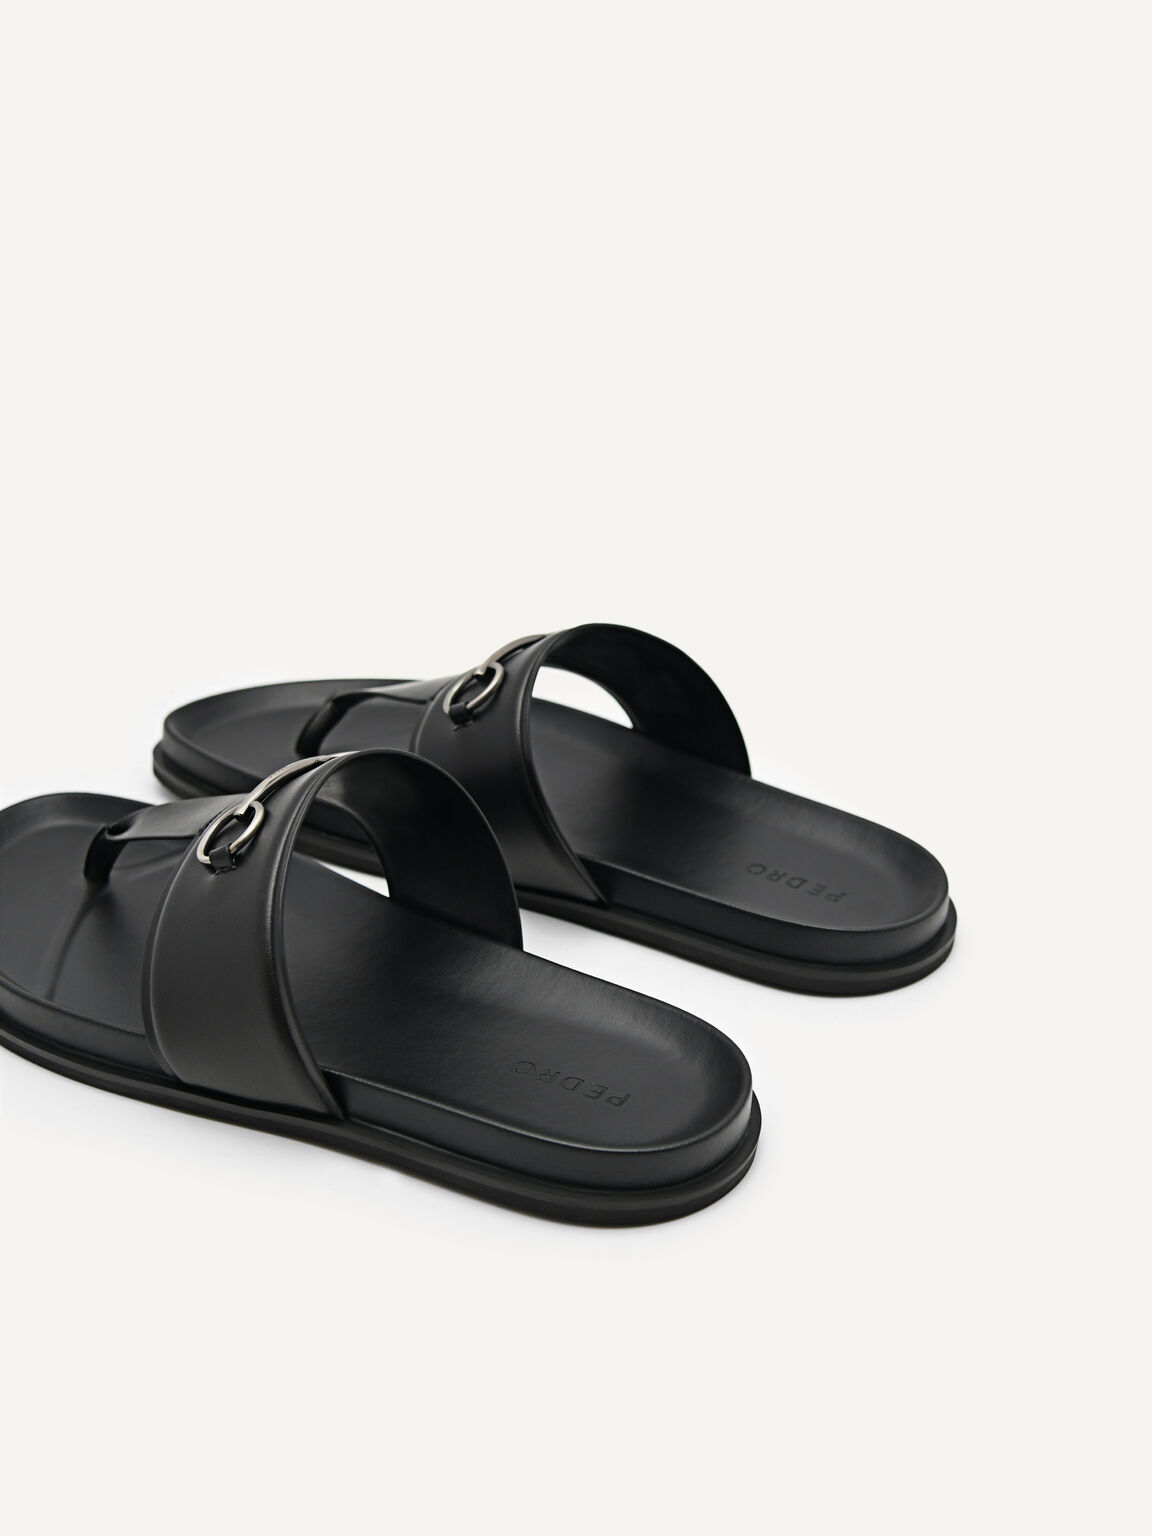 Bel-Air Sandals, Black